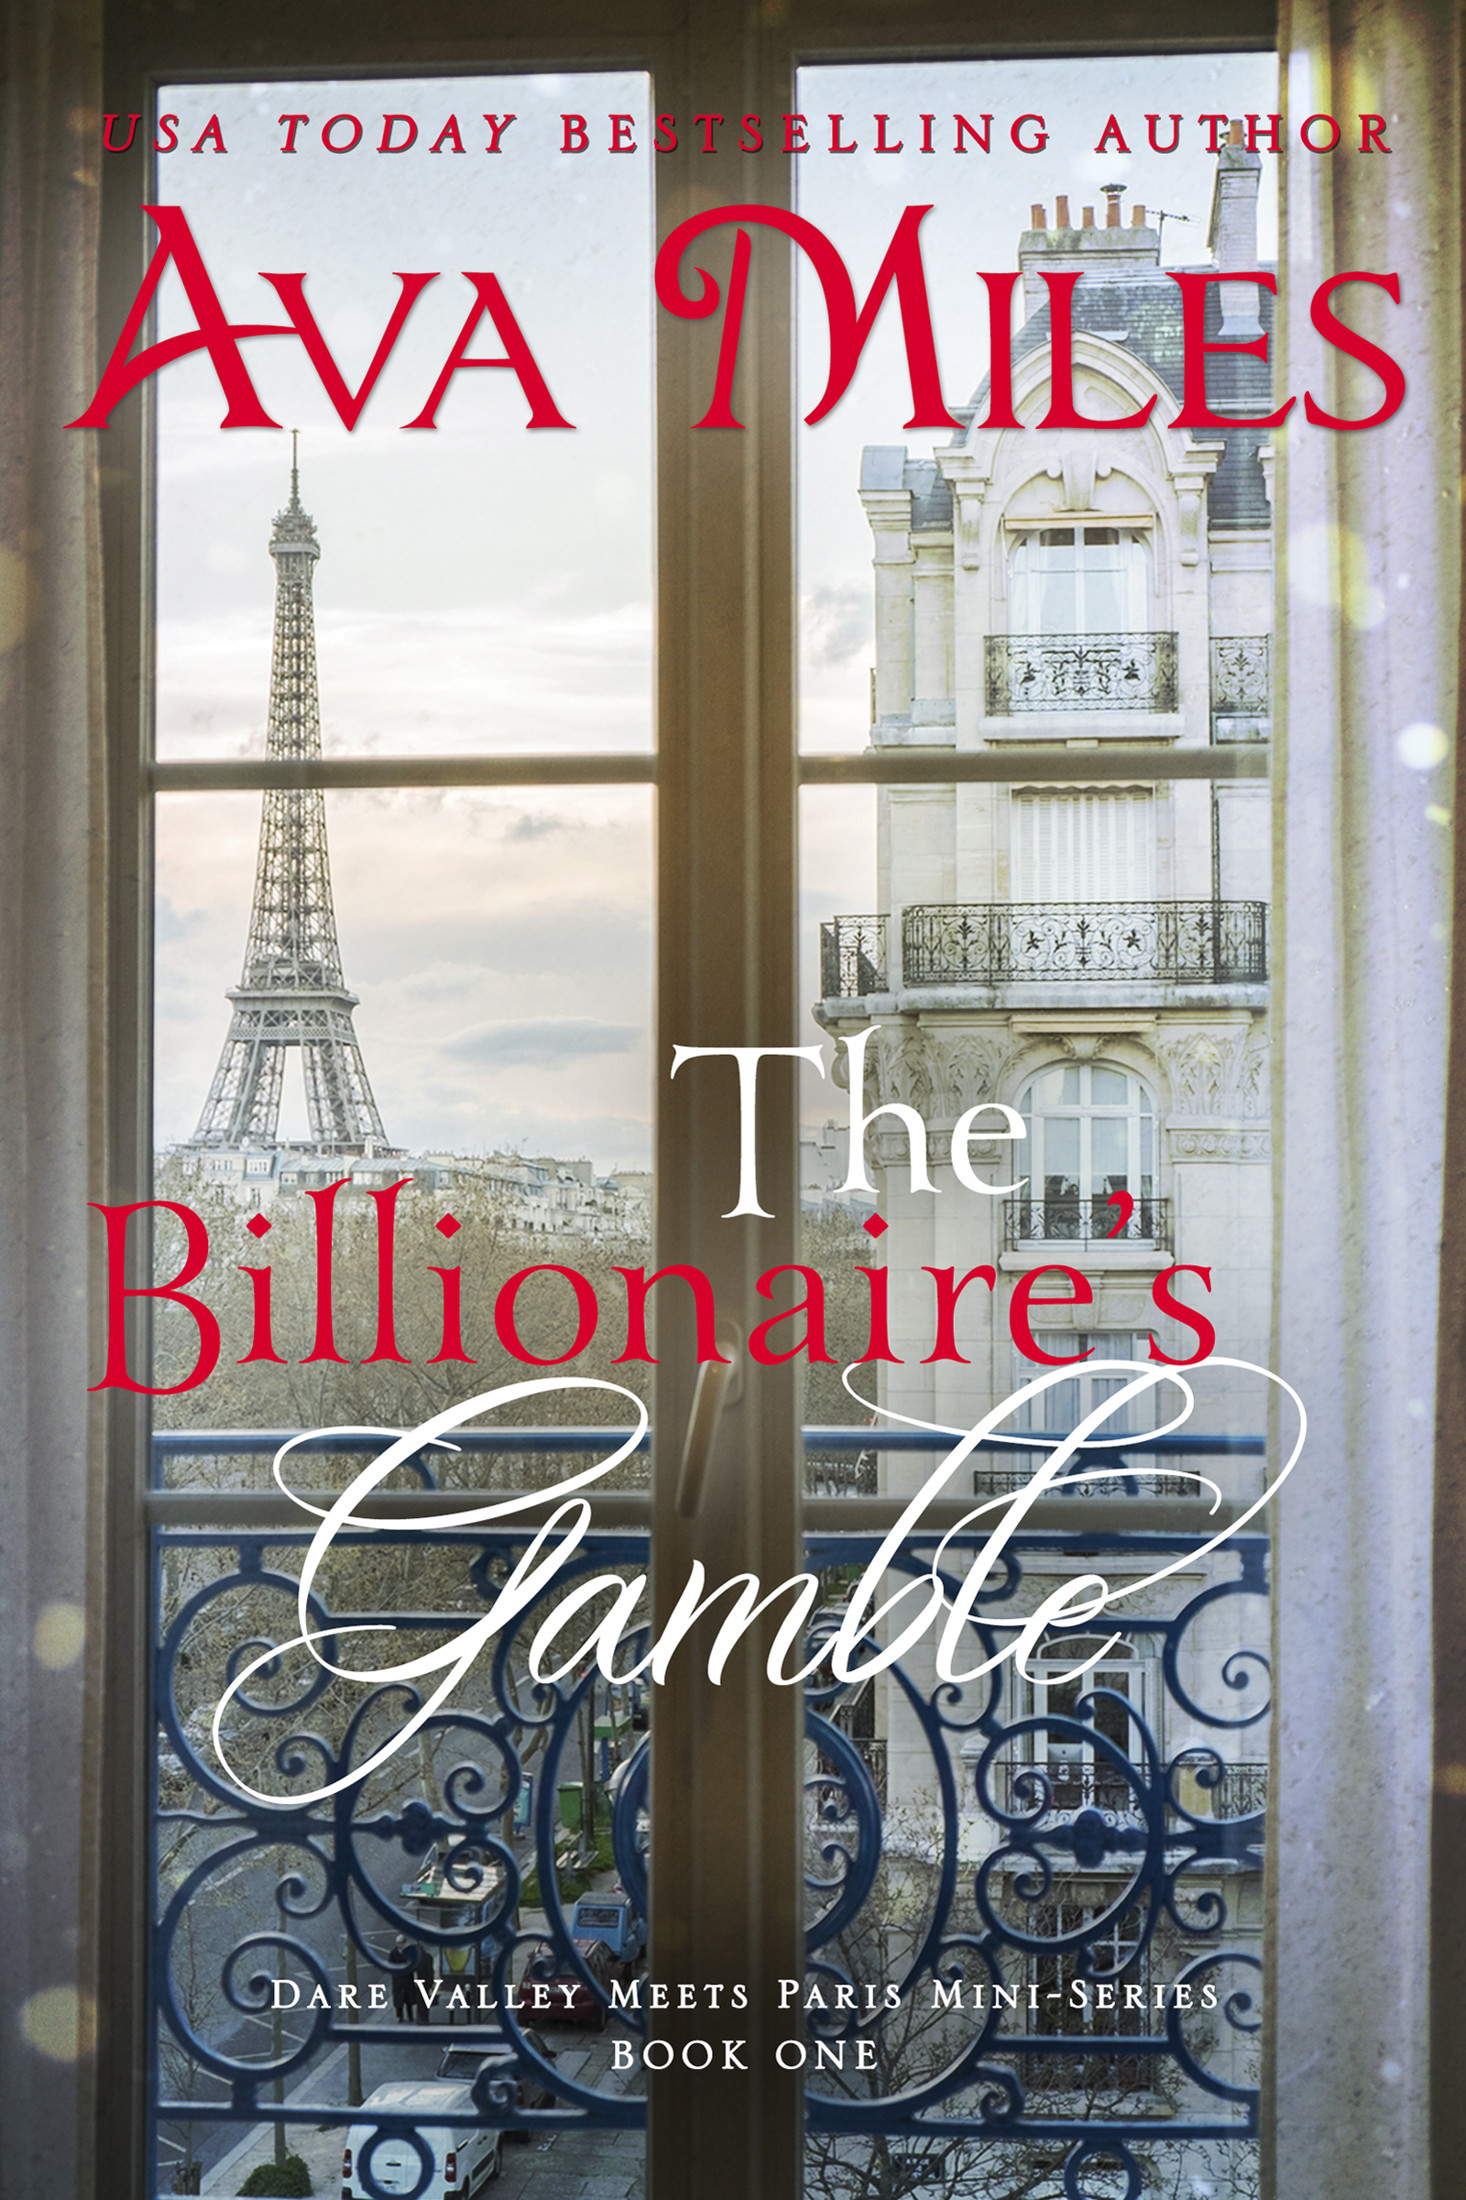 The Billionaire's Gamble by Ava Miles